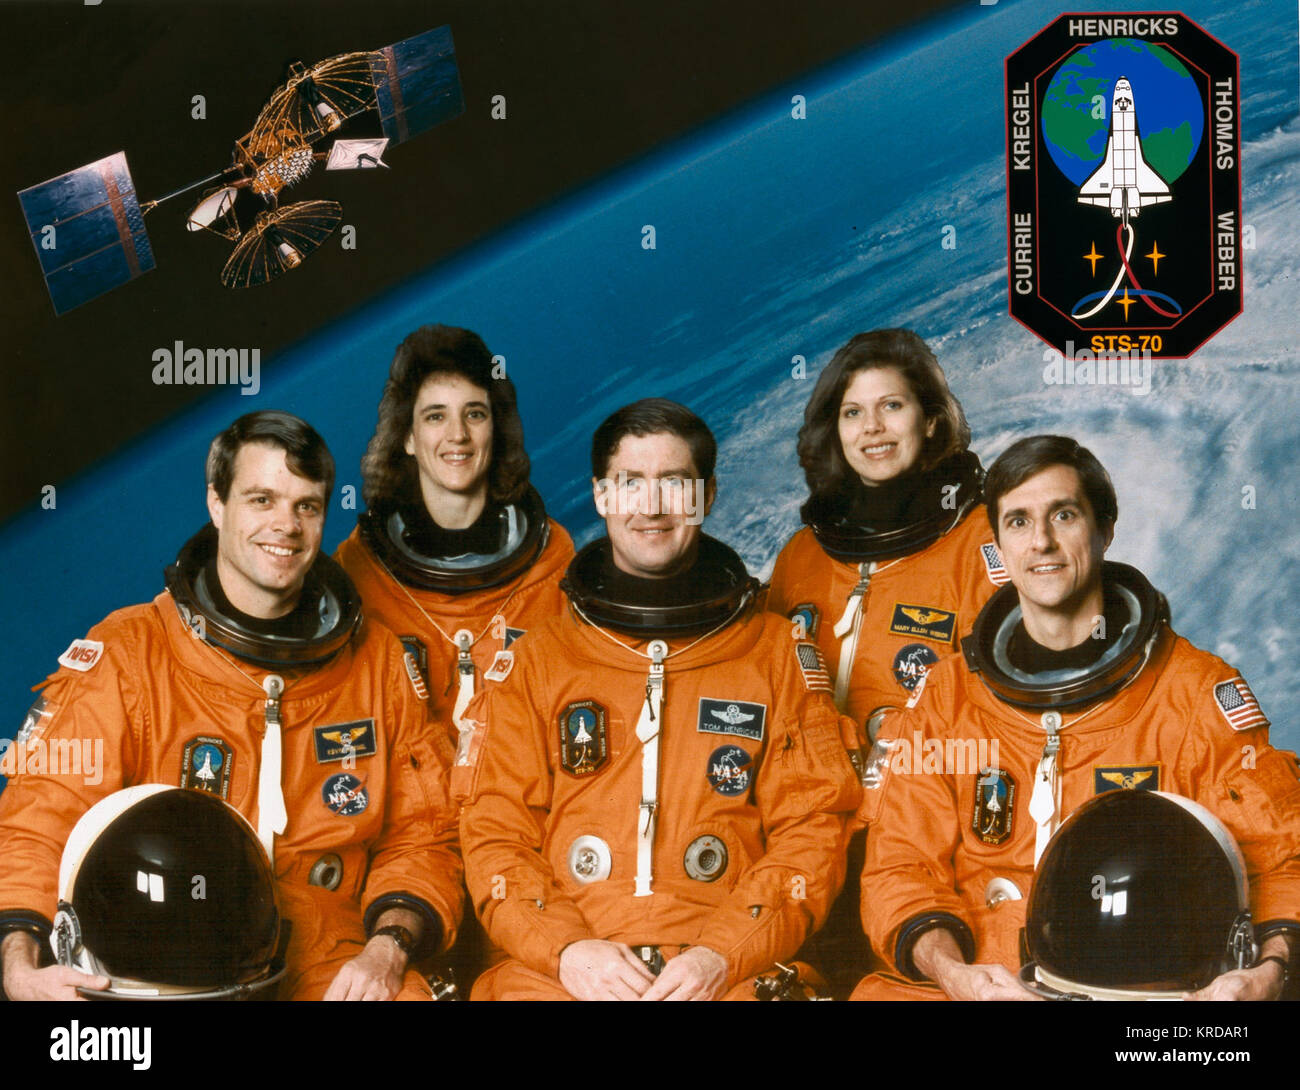 STS-70 CREW PORTRAIT L/R: KREGEL, KEVIN; CURRIE, NANCY; HENRICKS, TERENCE; WEBER, MARY-ELLEN; THOMAS, DONALD STS-70 crew Stock Photo